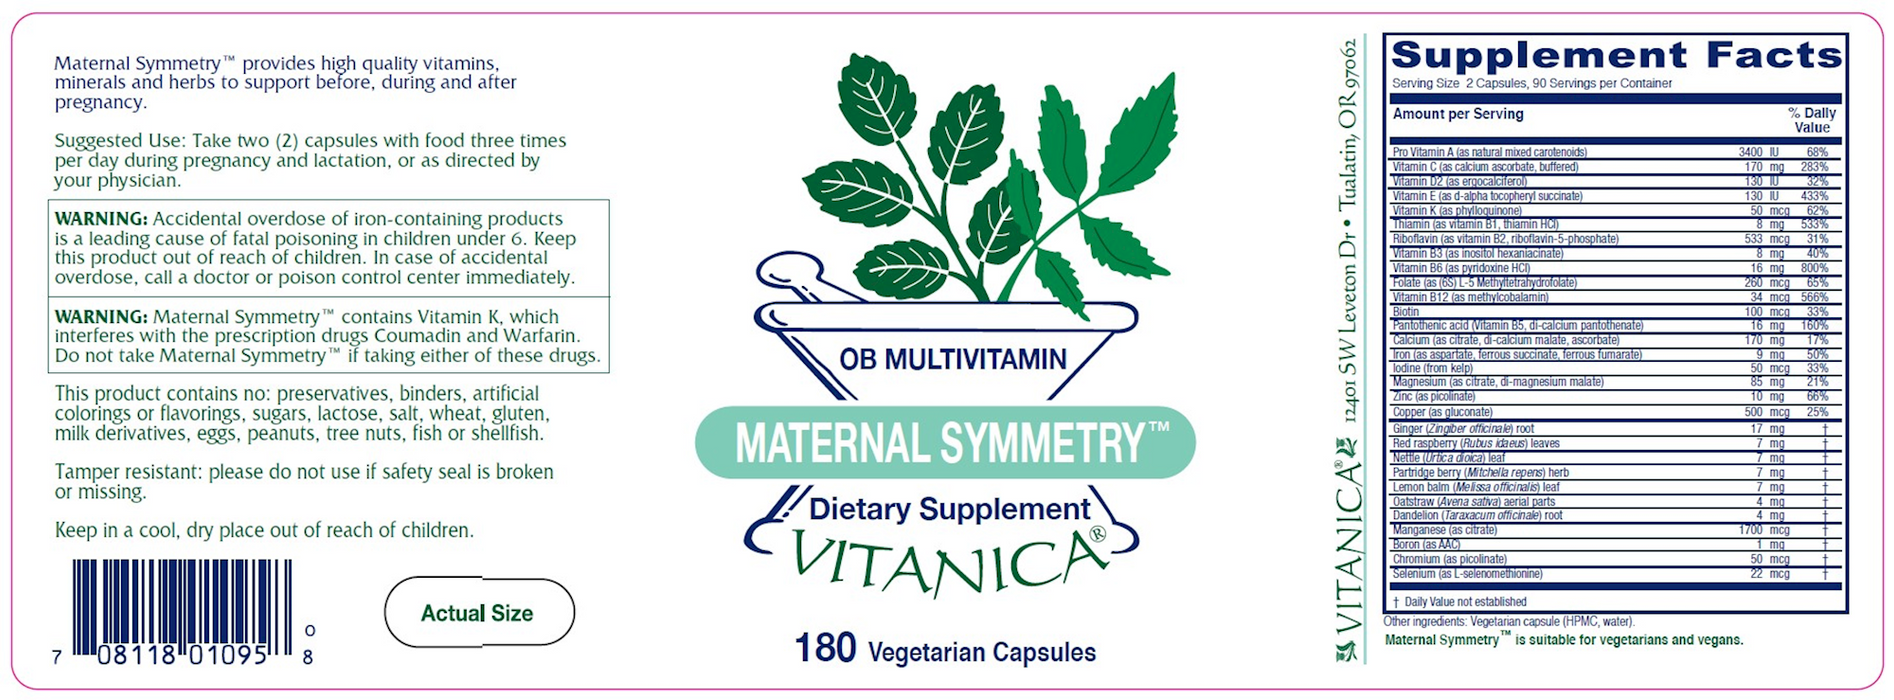 Maternal Symmetry